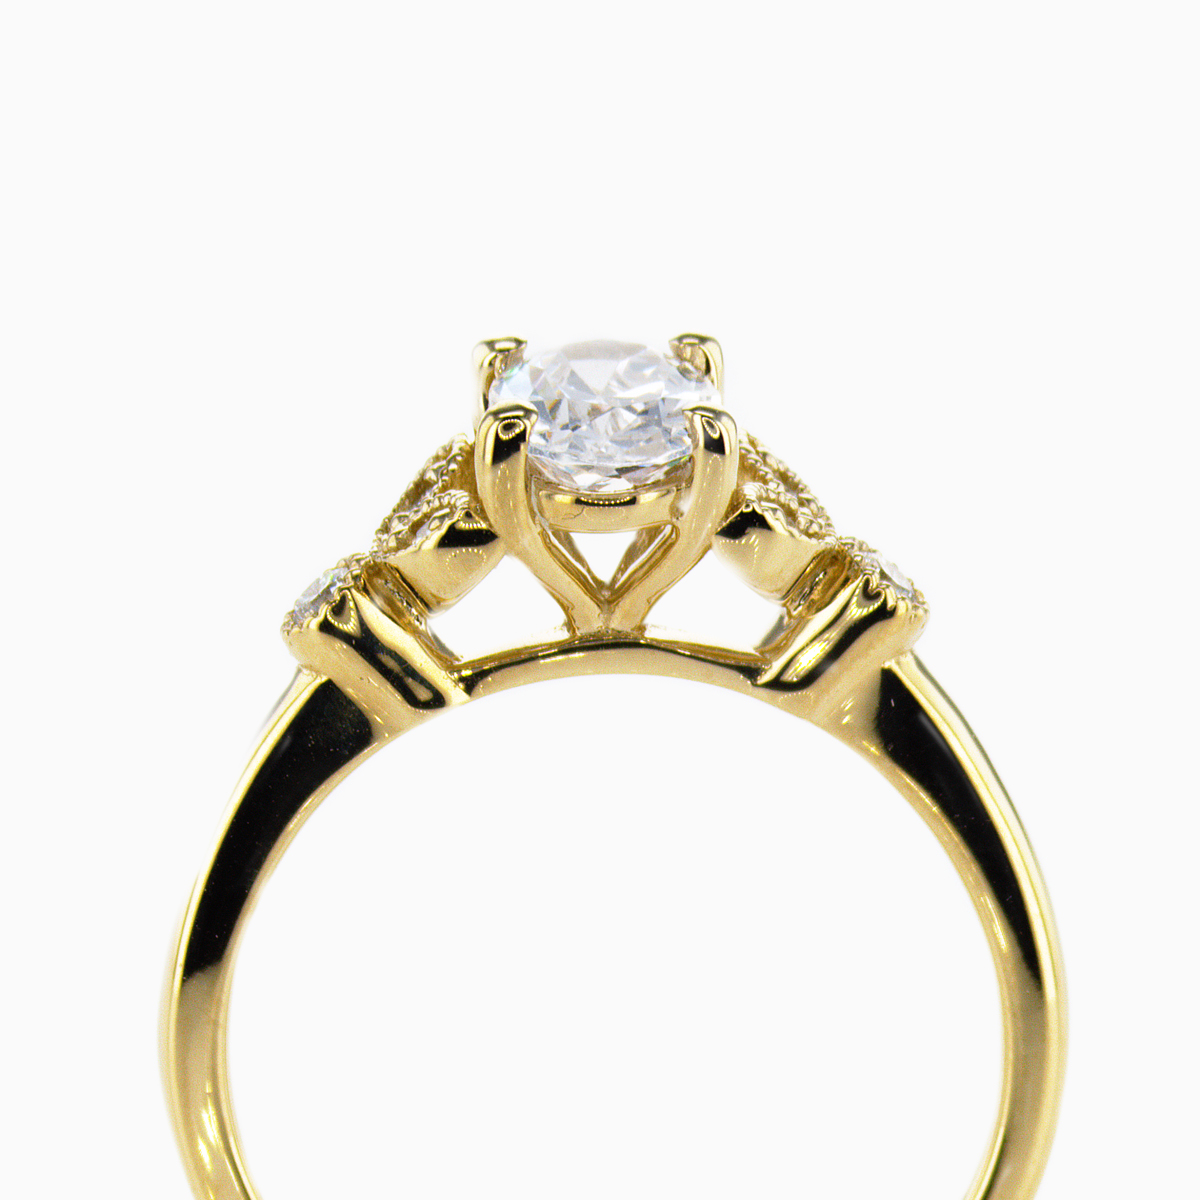 Diamond Wedding Ring with Vine and Leaf Motif, RG-3475b | Antique style  wedding rings, Diamond wedding rings, Wedding rings